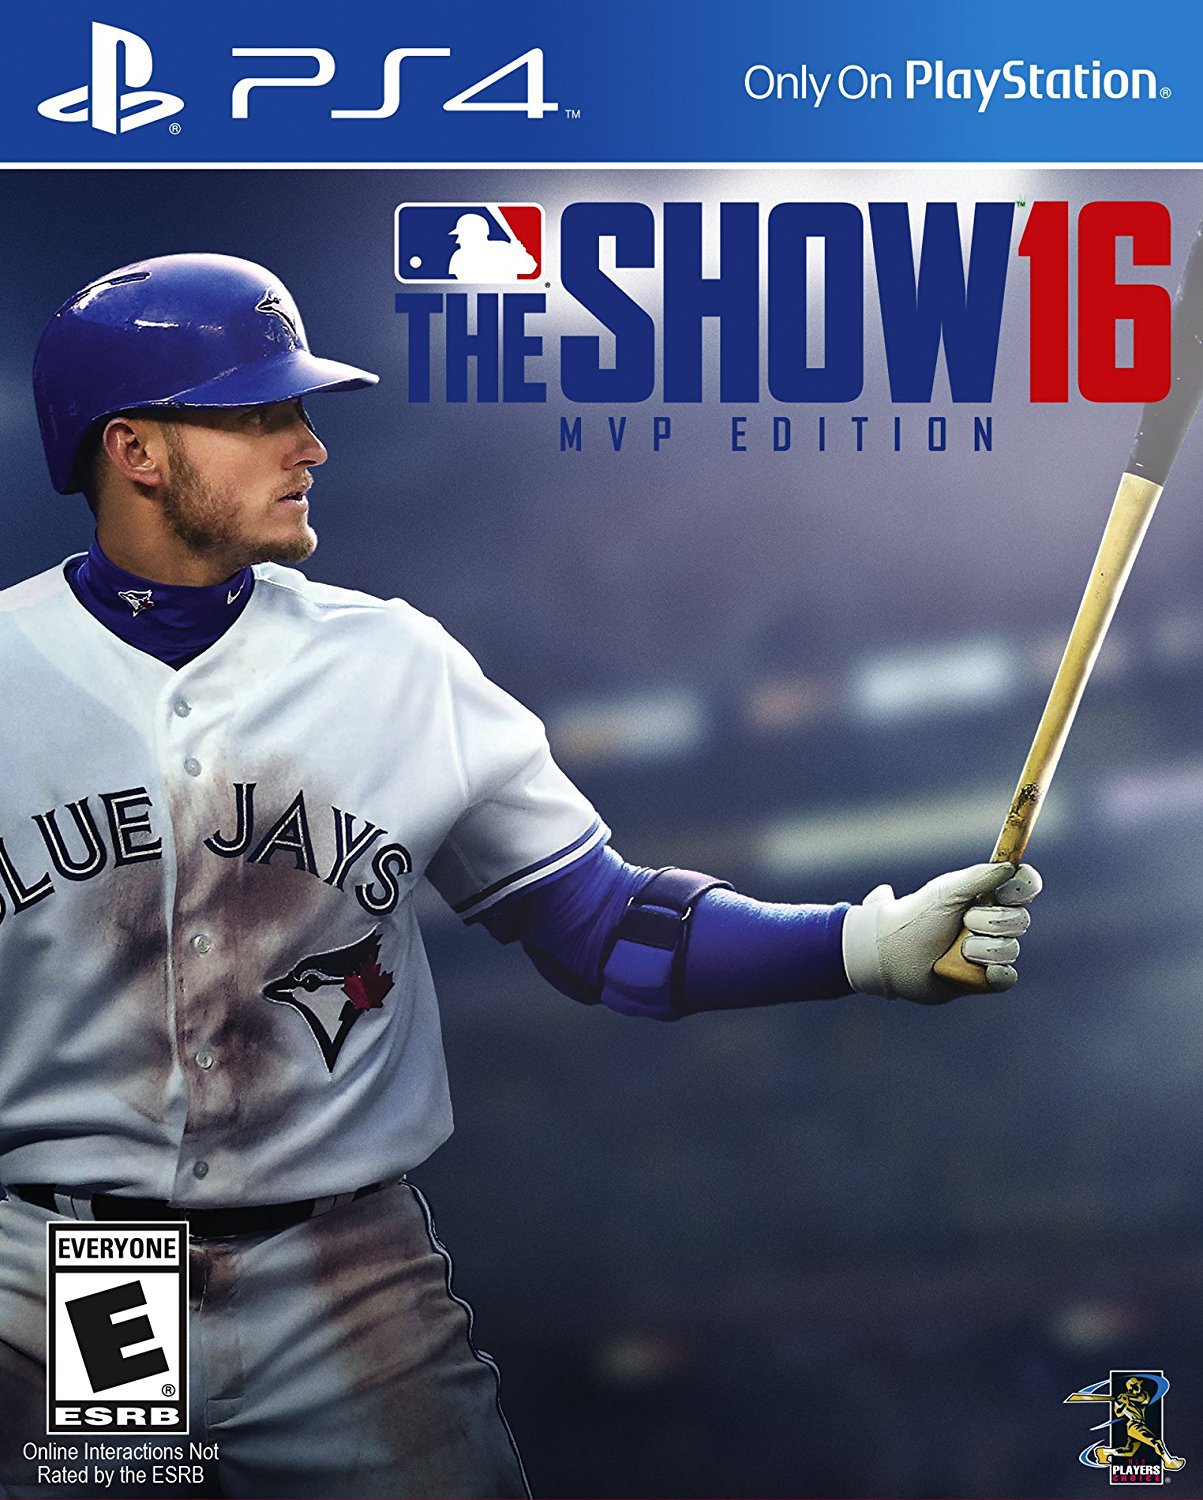 MLB: The Show 16 MVP Edition